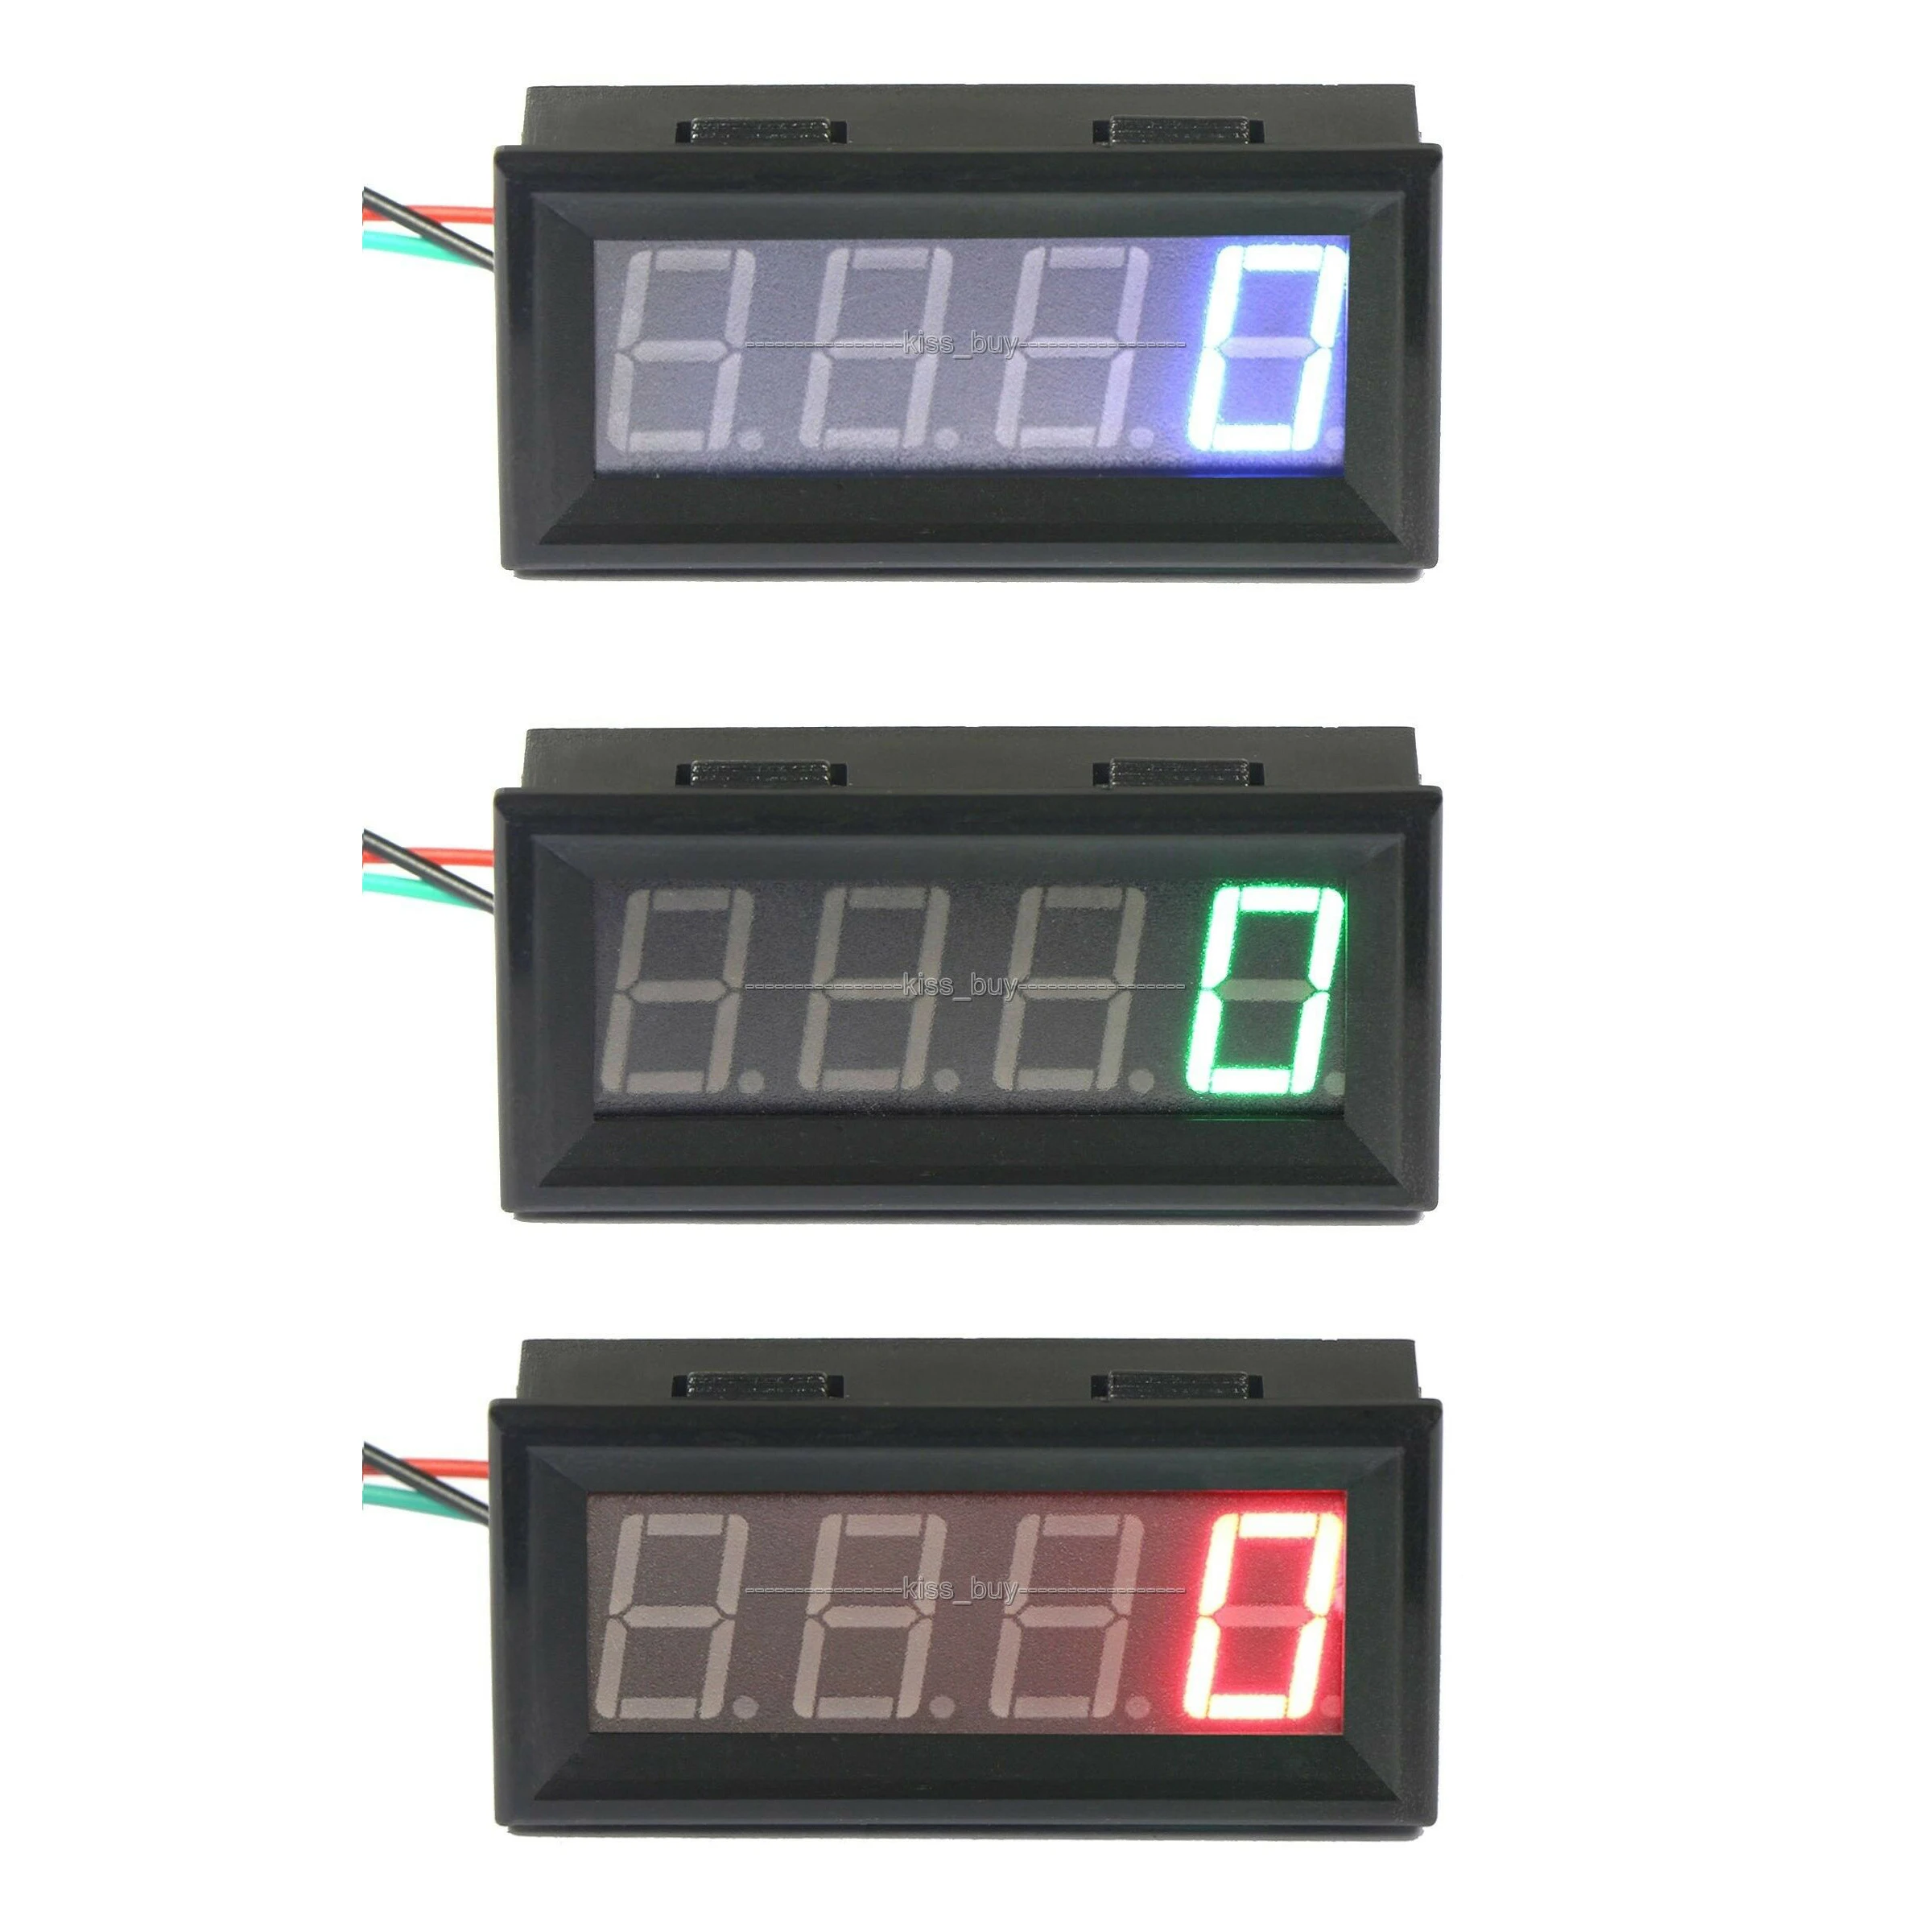 DYKB 0.56" LED Display Digital Speedometer Tachometer RPM DC 12V 24V Tacho Gauge Speed Monitor meter F car Motor Engine Sensor